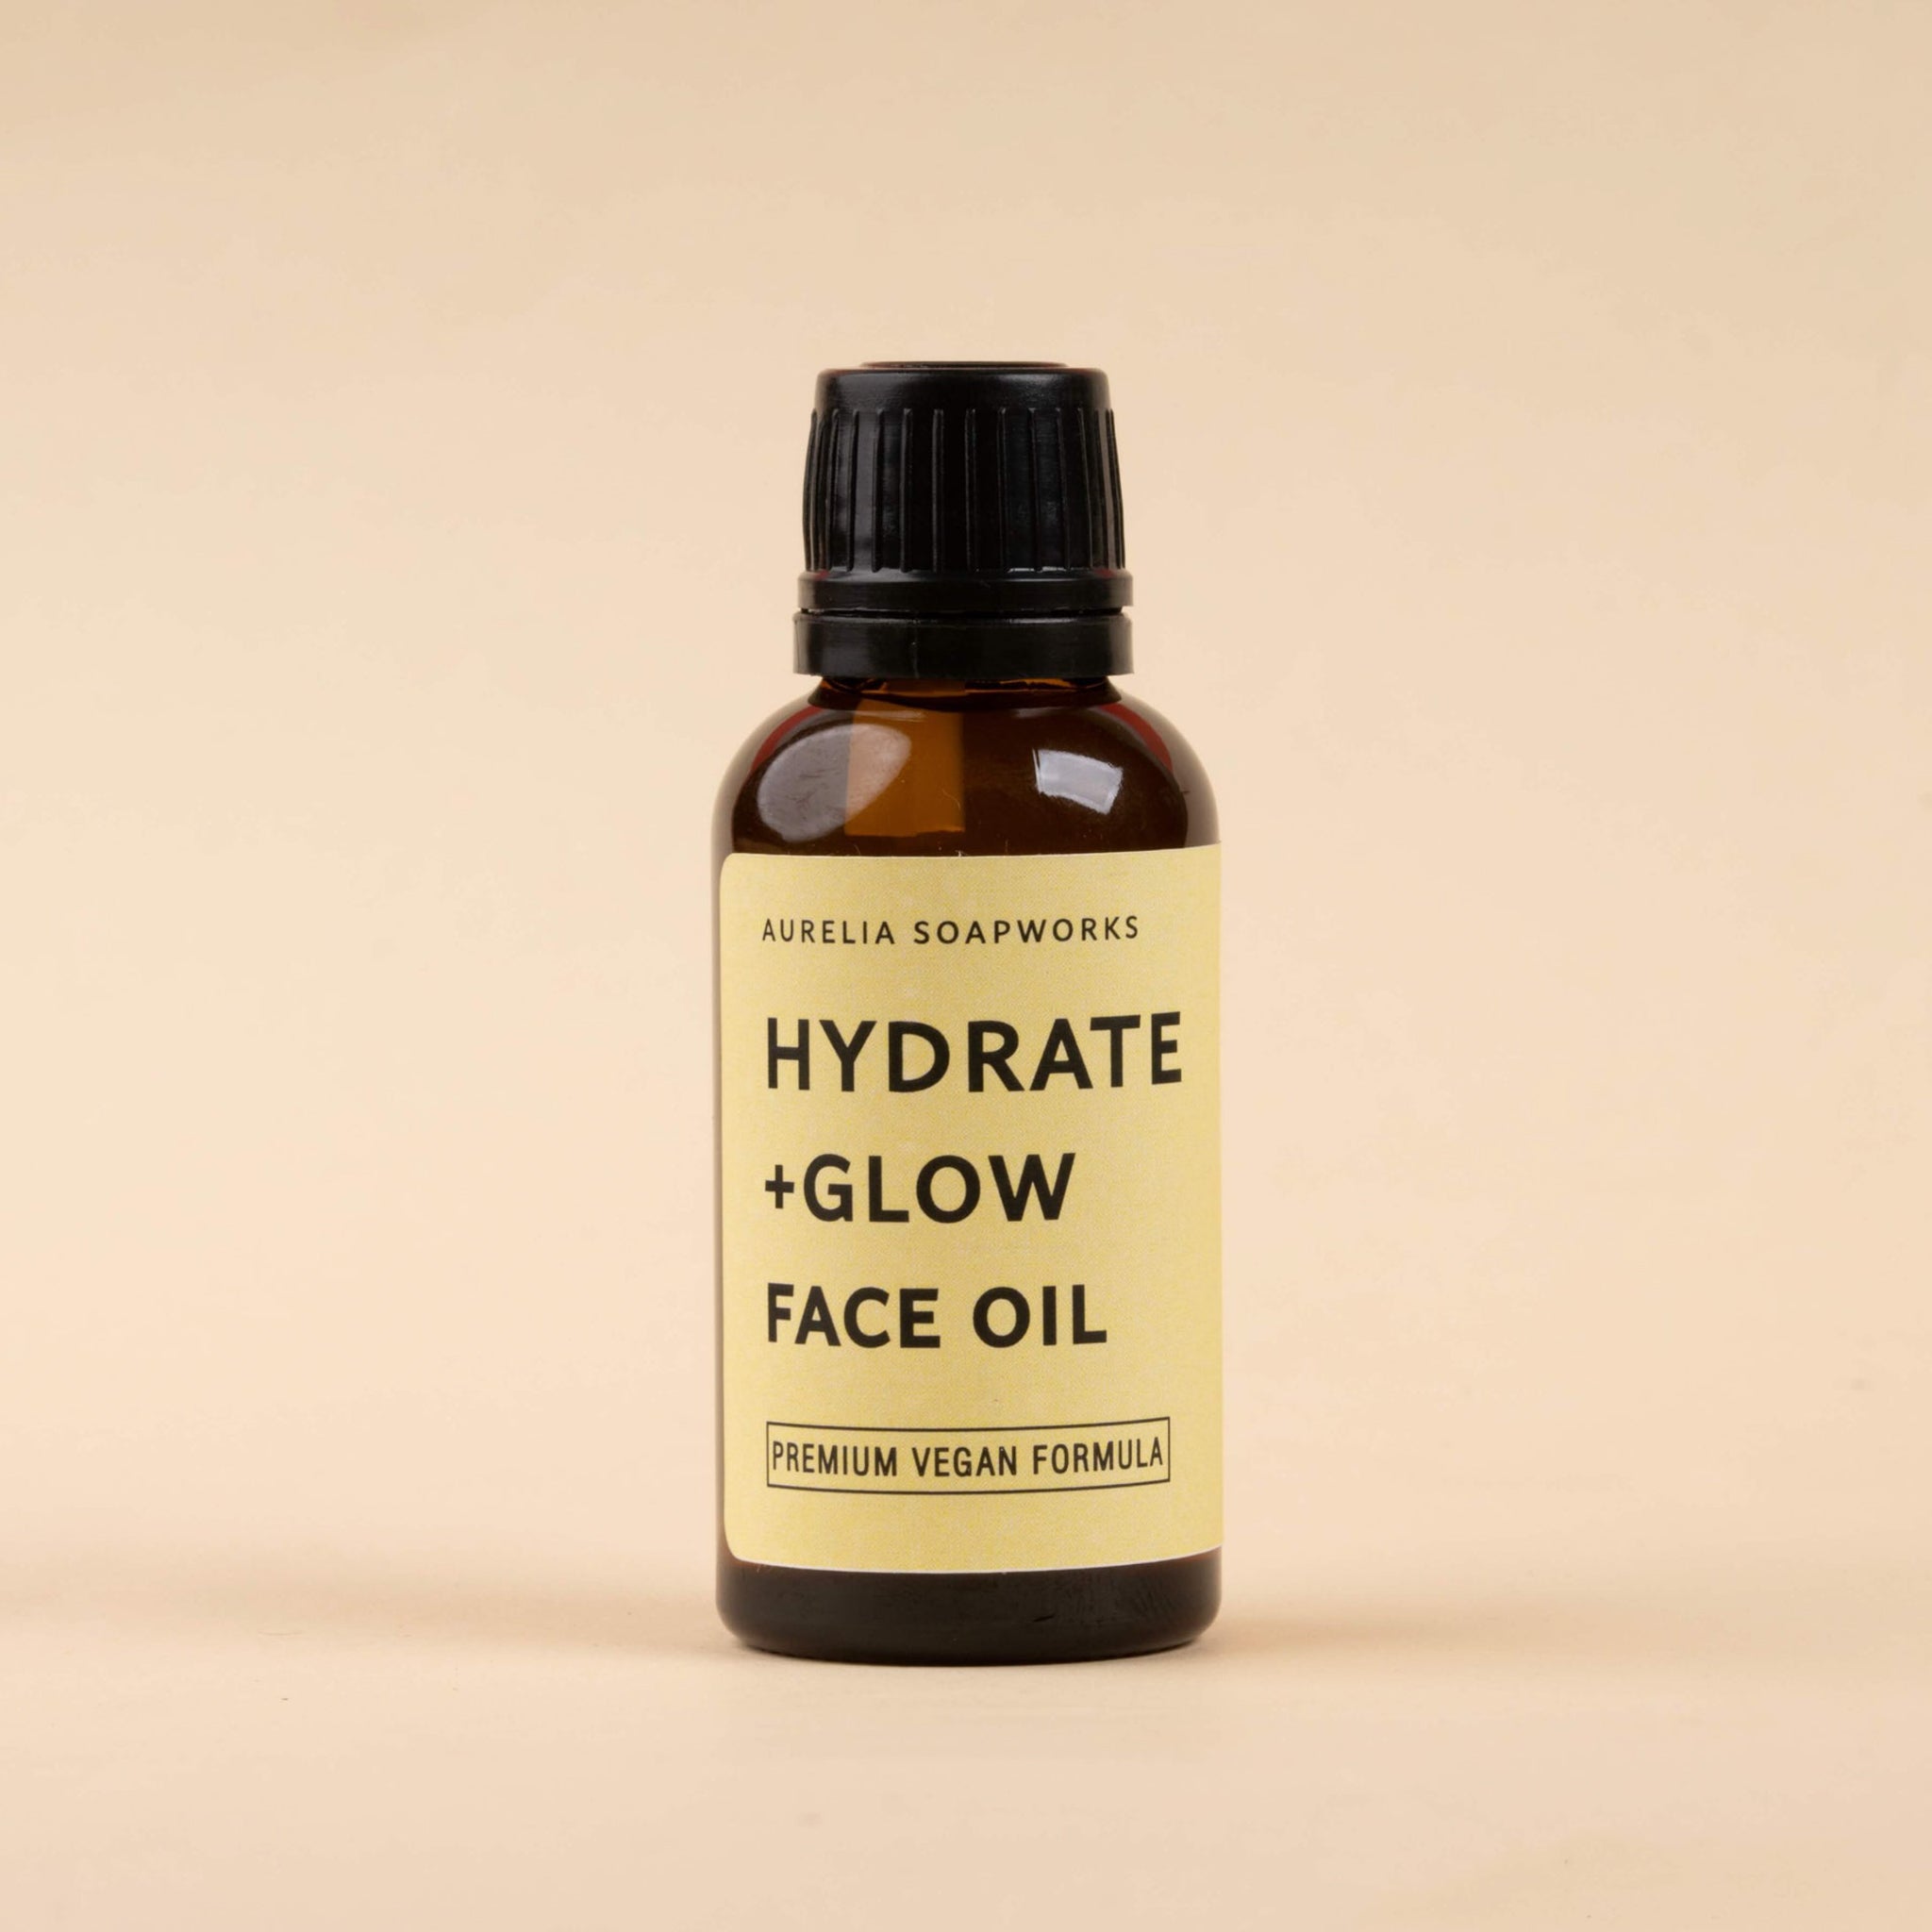 Hydrate+glow face oil